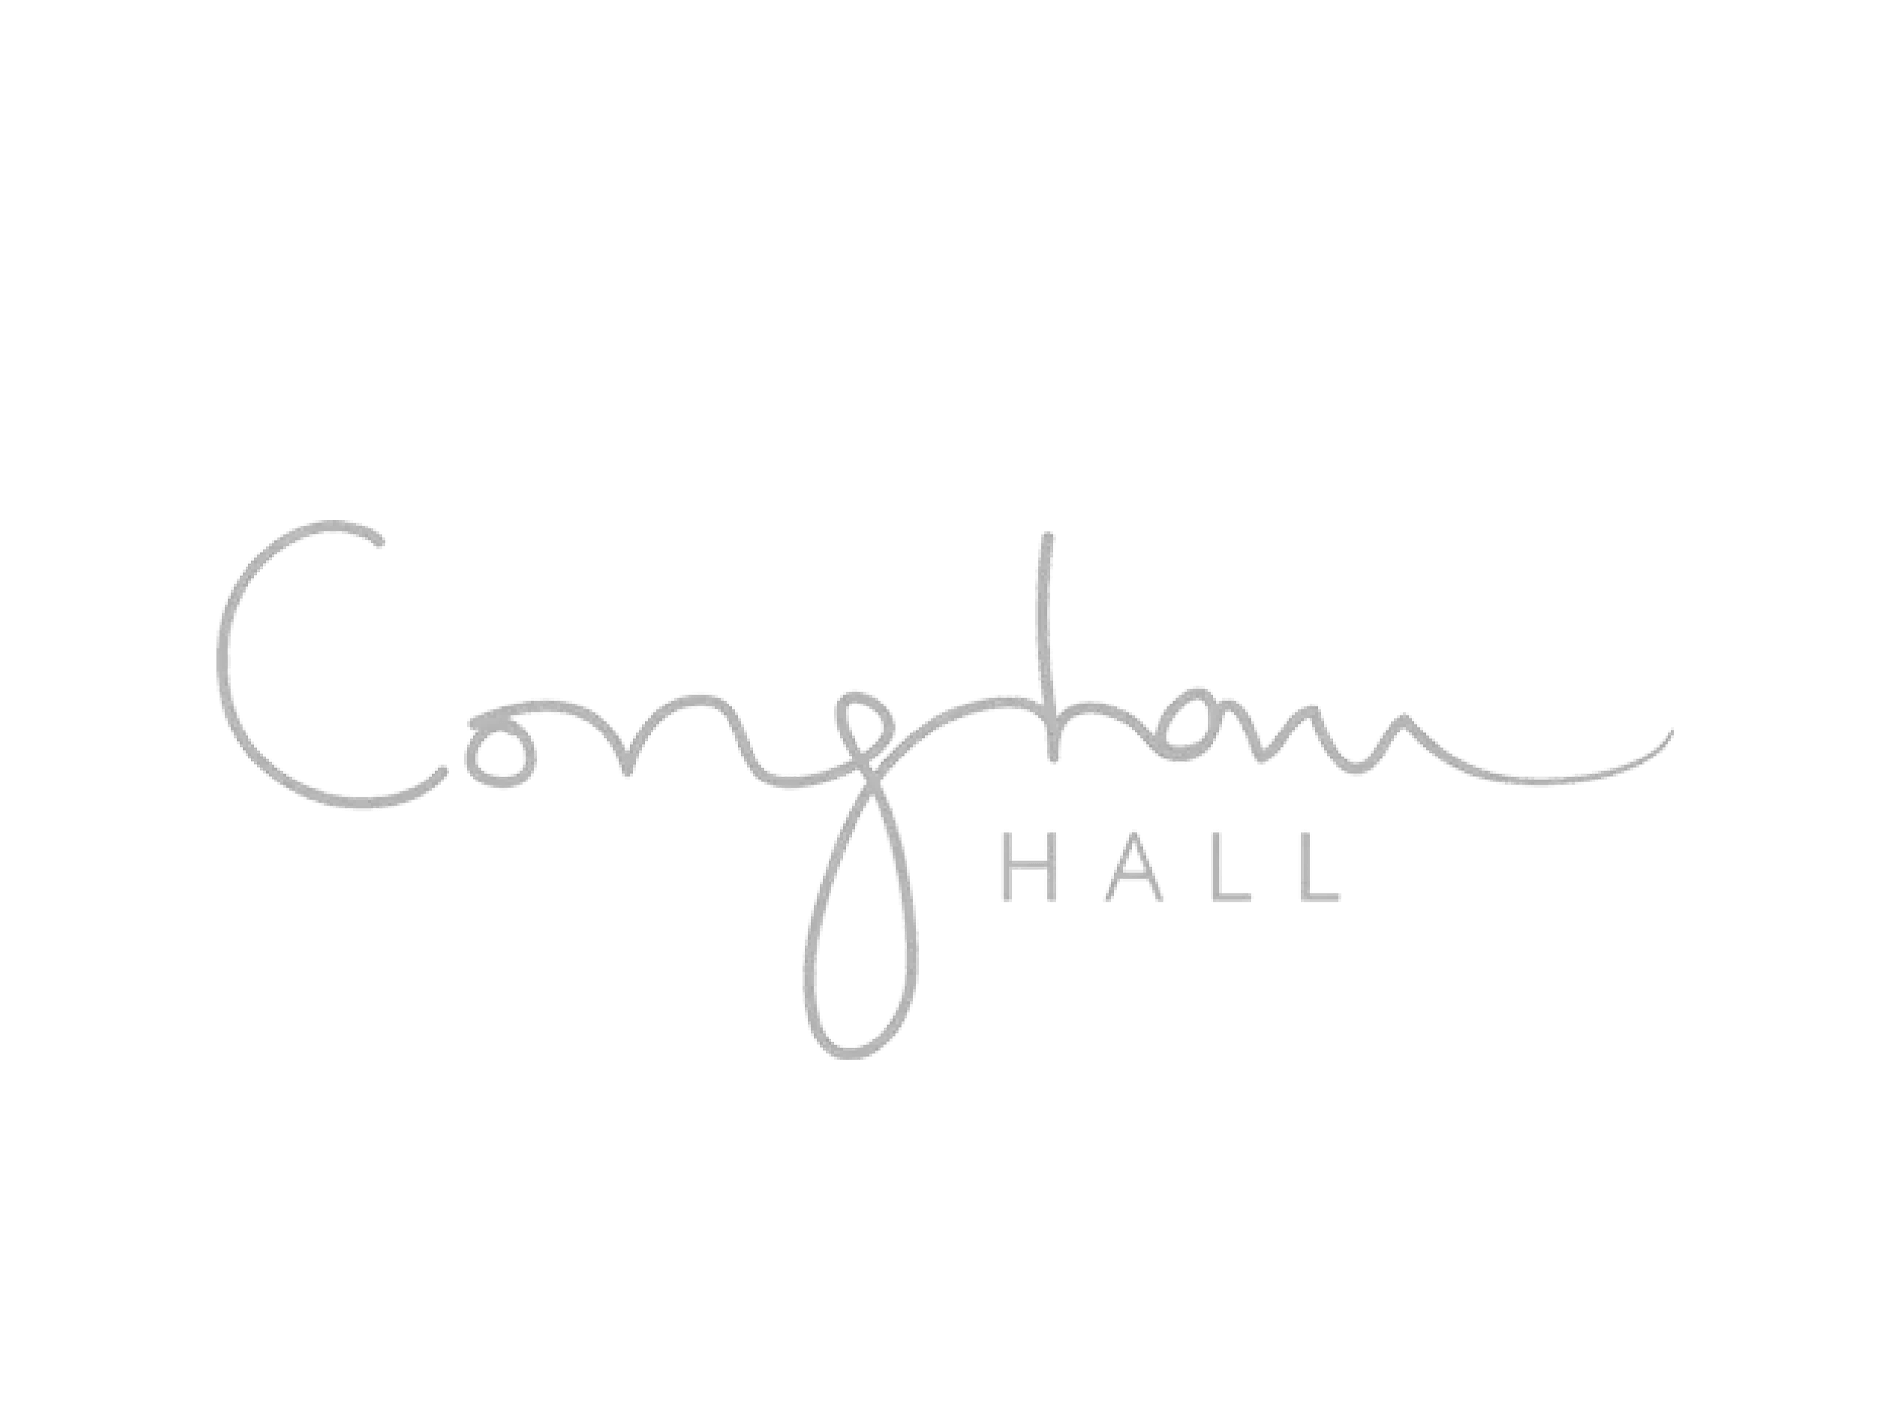 Congham Hall grey-1